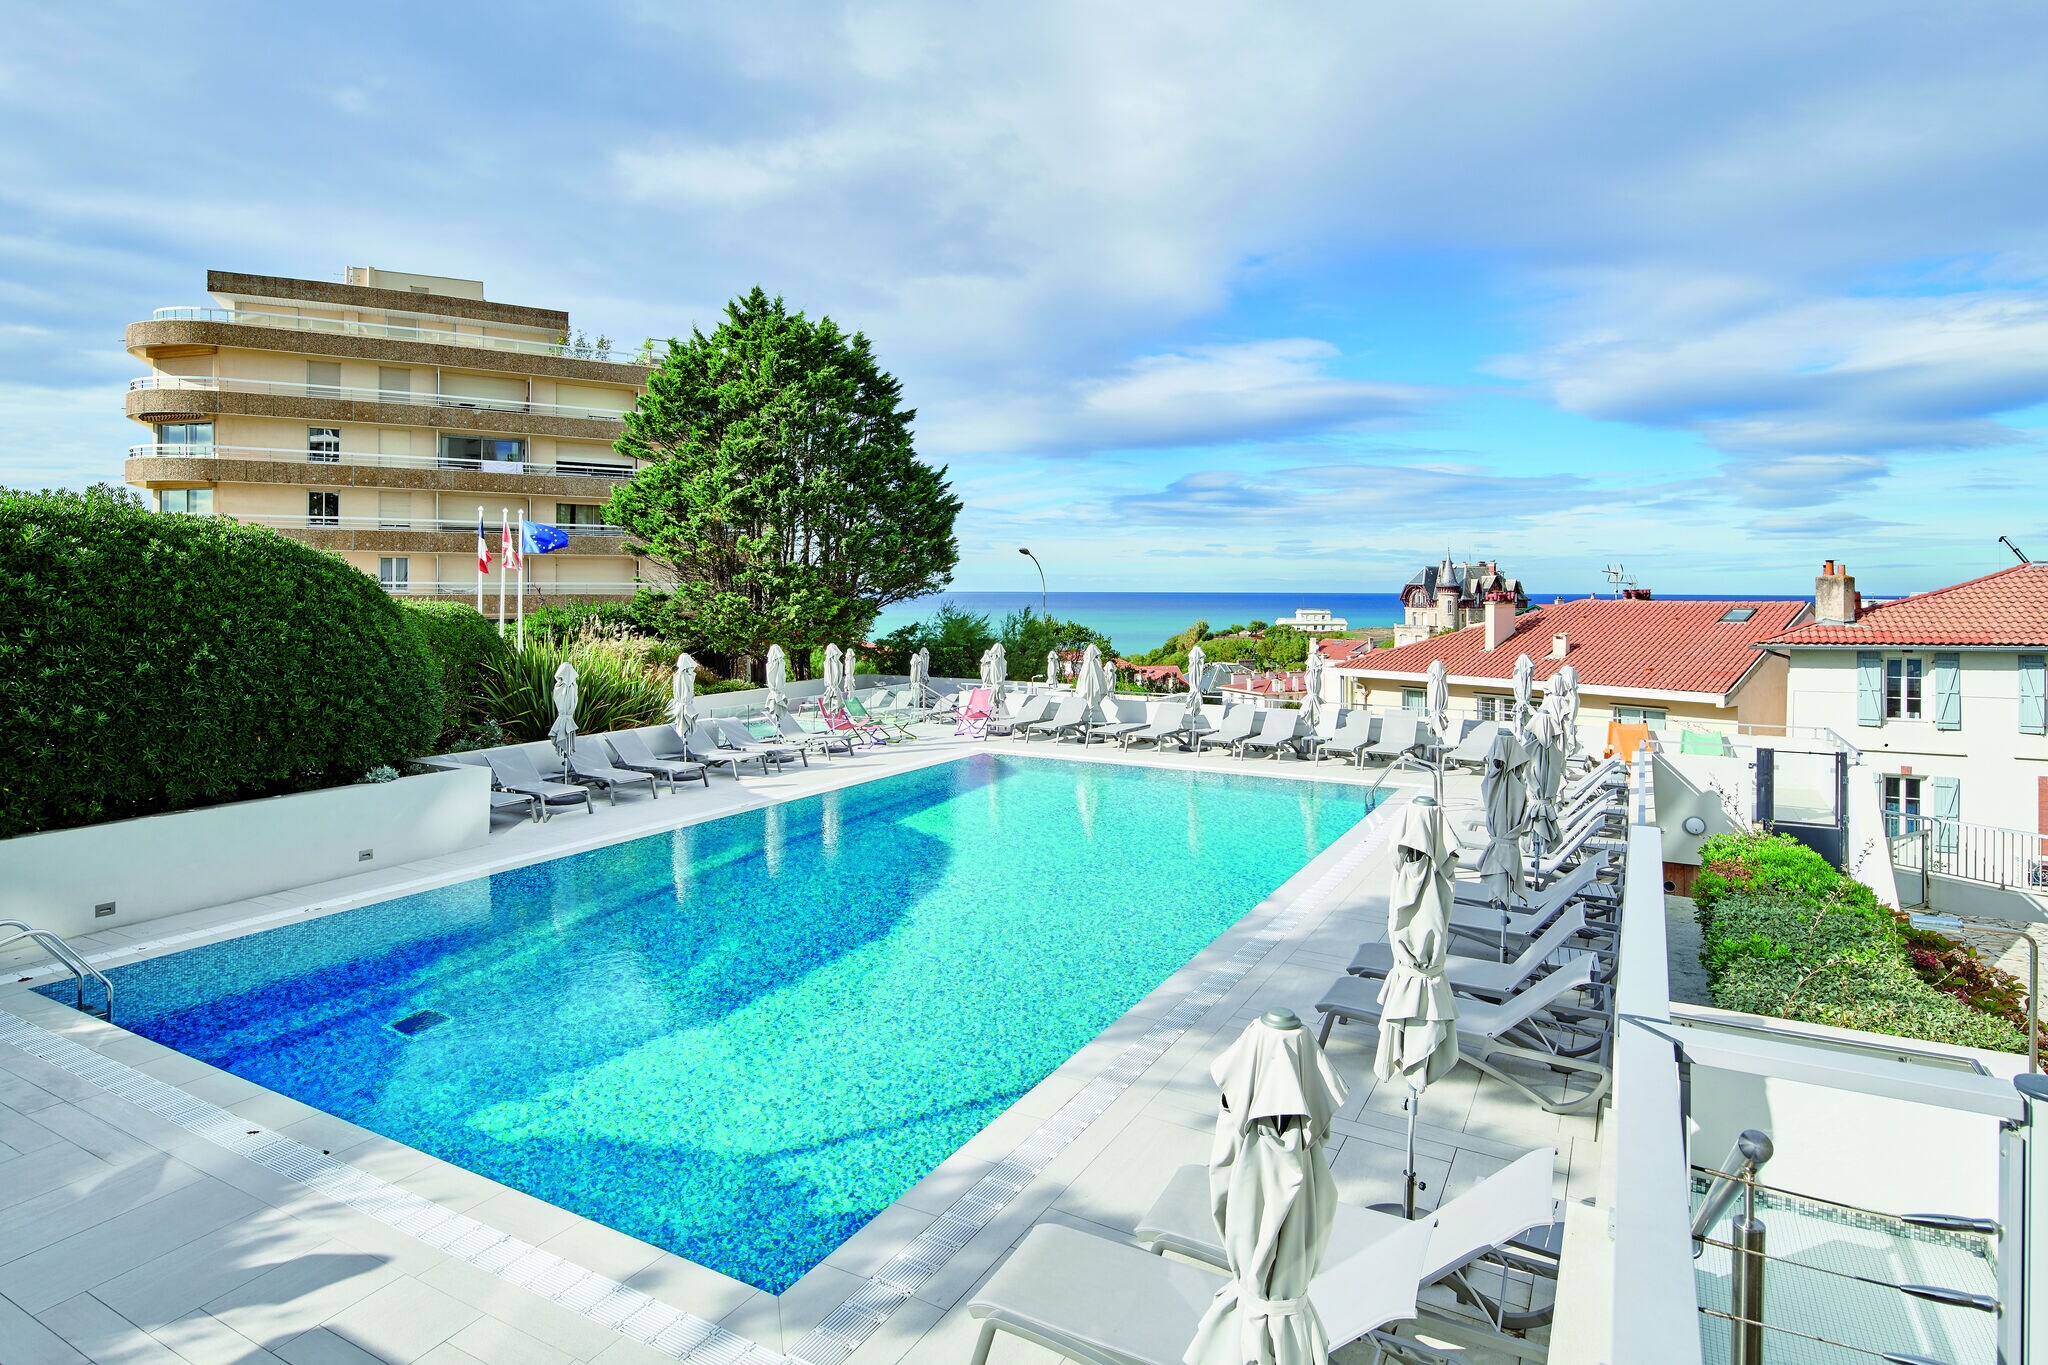 Apartment with balcony in seaside resort Biarritz